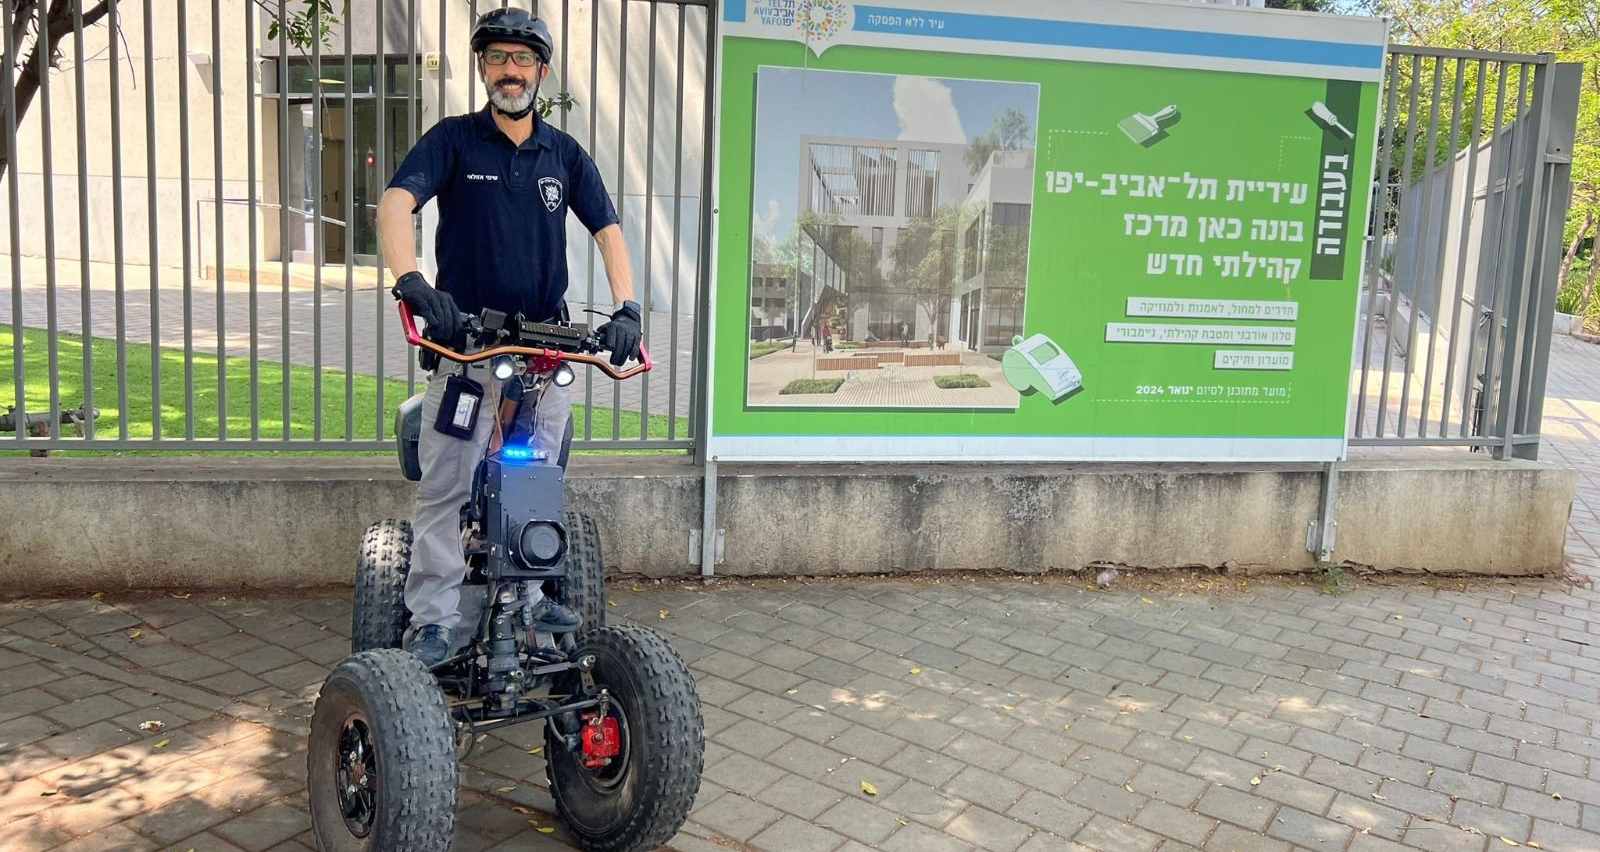 EZRaider Tel Aviv Municipality